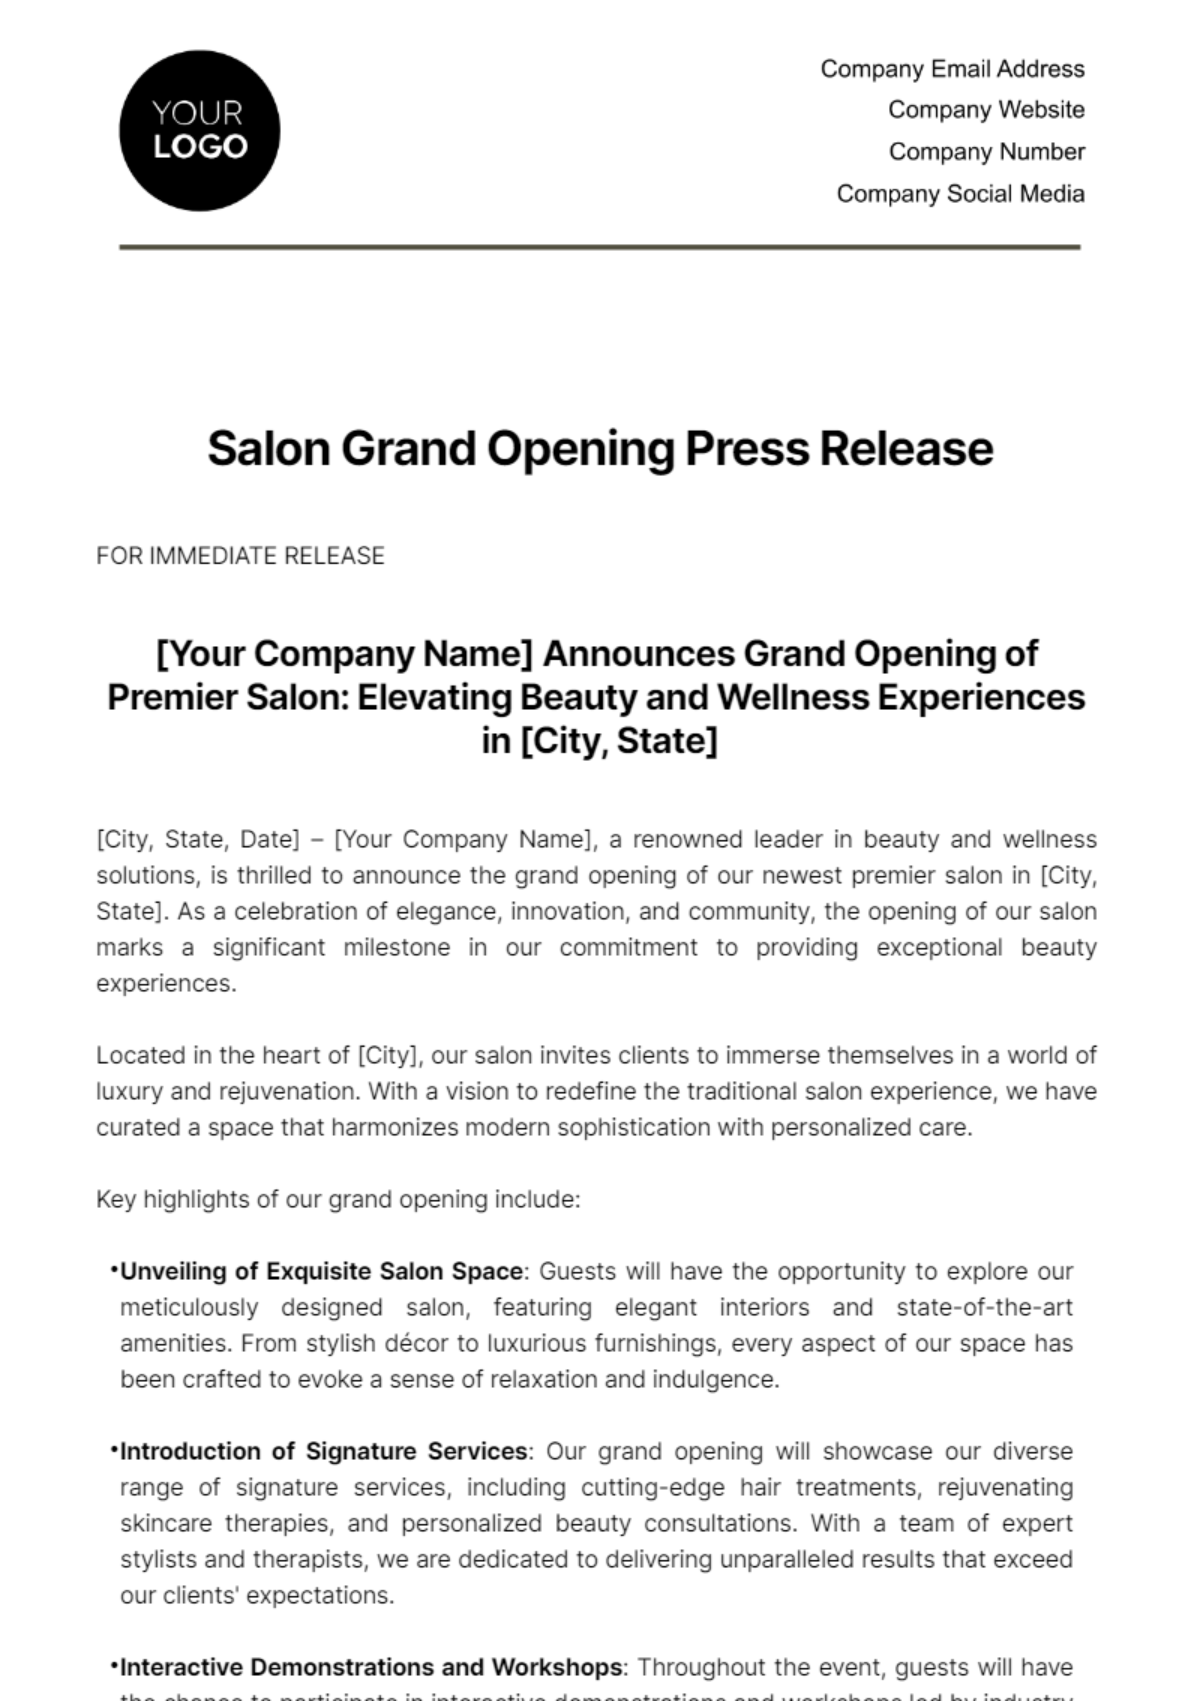 Salon Grand Opening Press Release Template